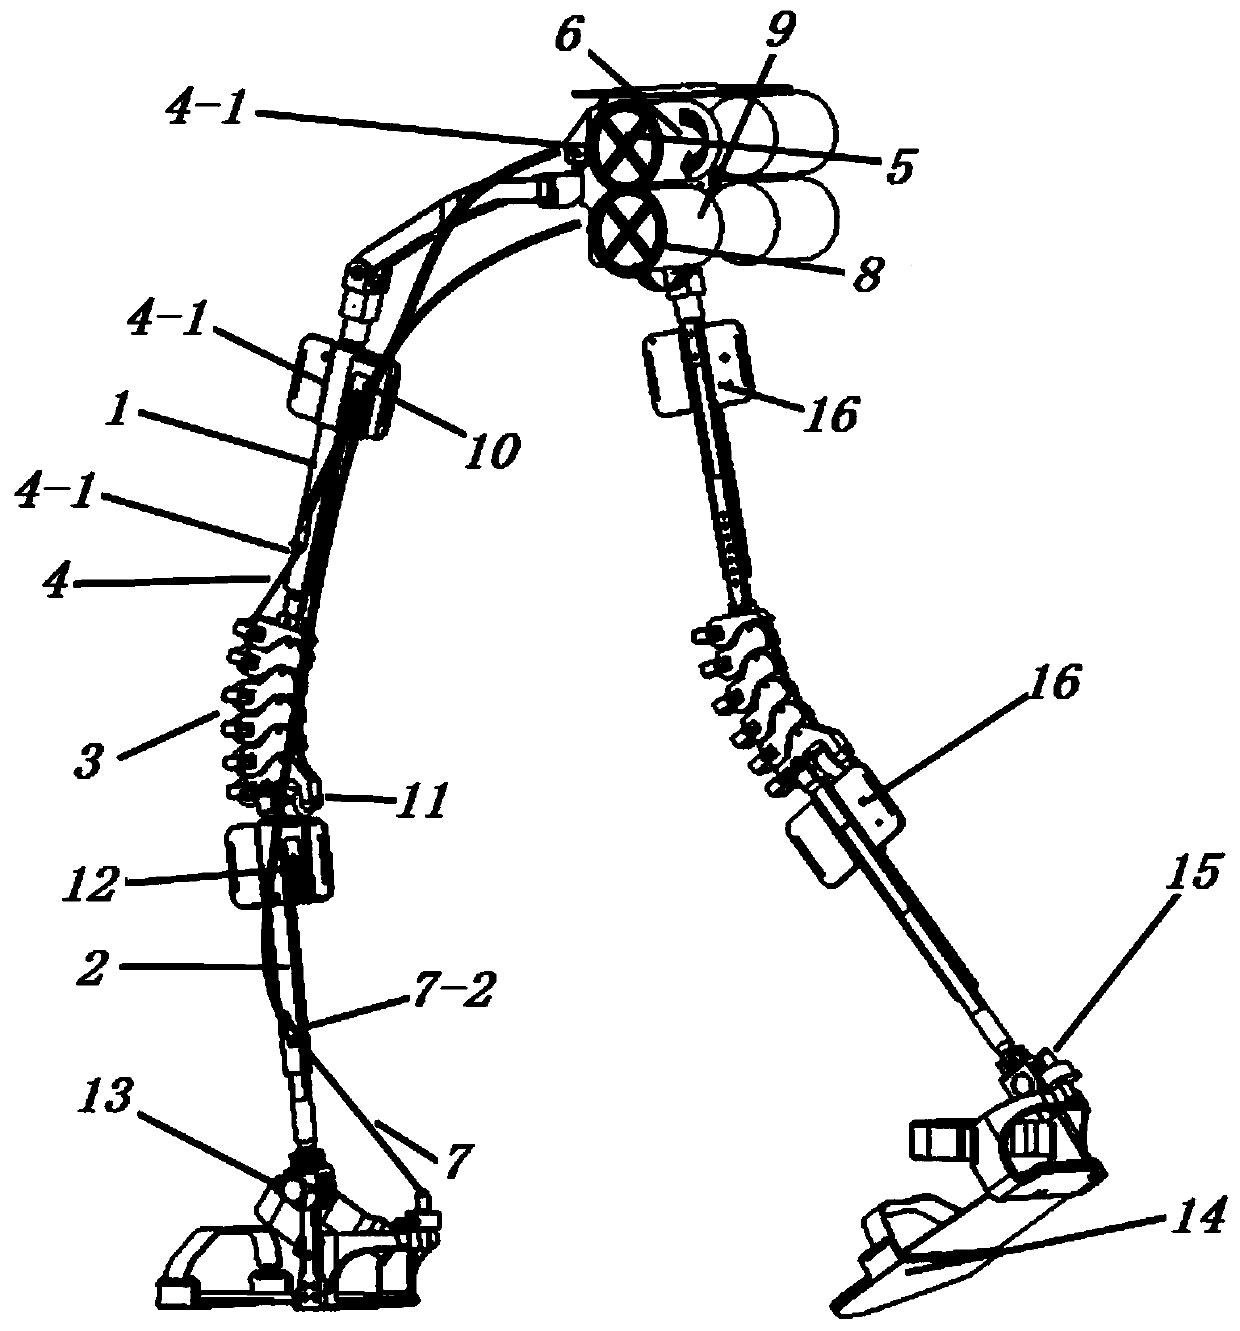 Rigid-flexible hybrid driven wearable power-assisted exoskeleton